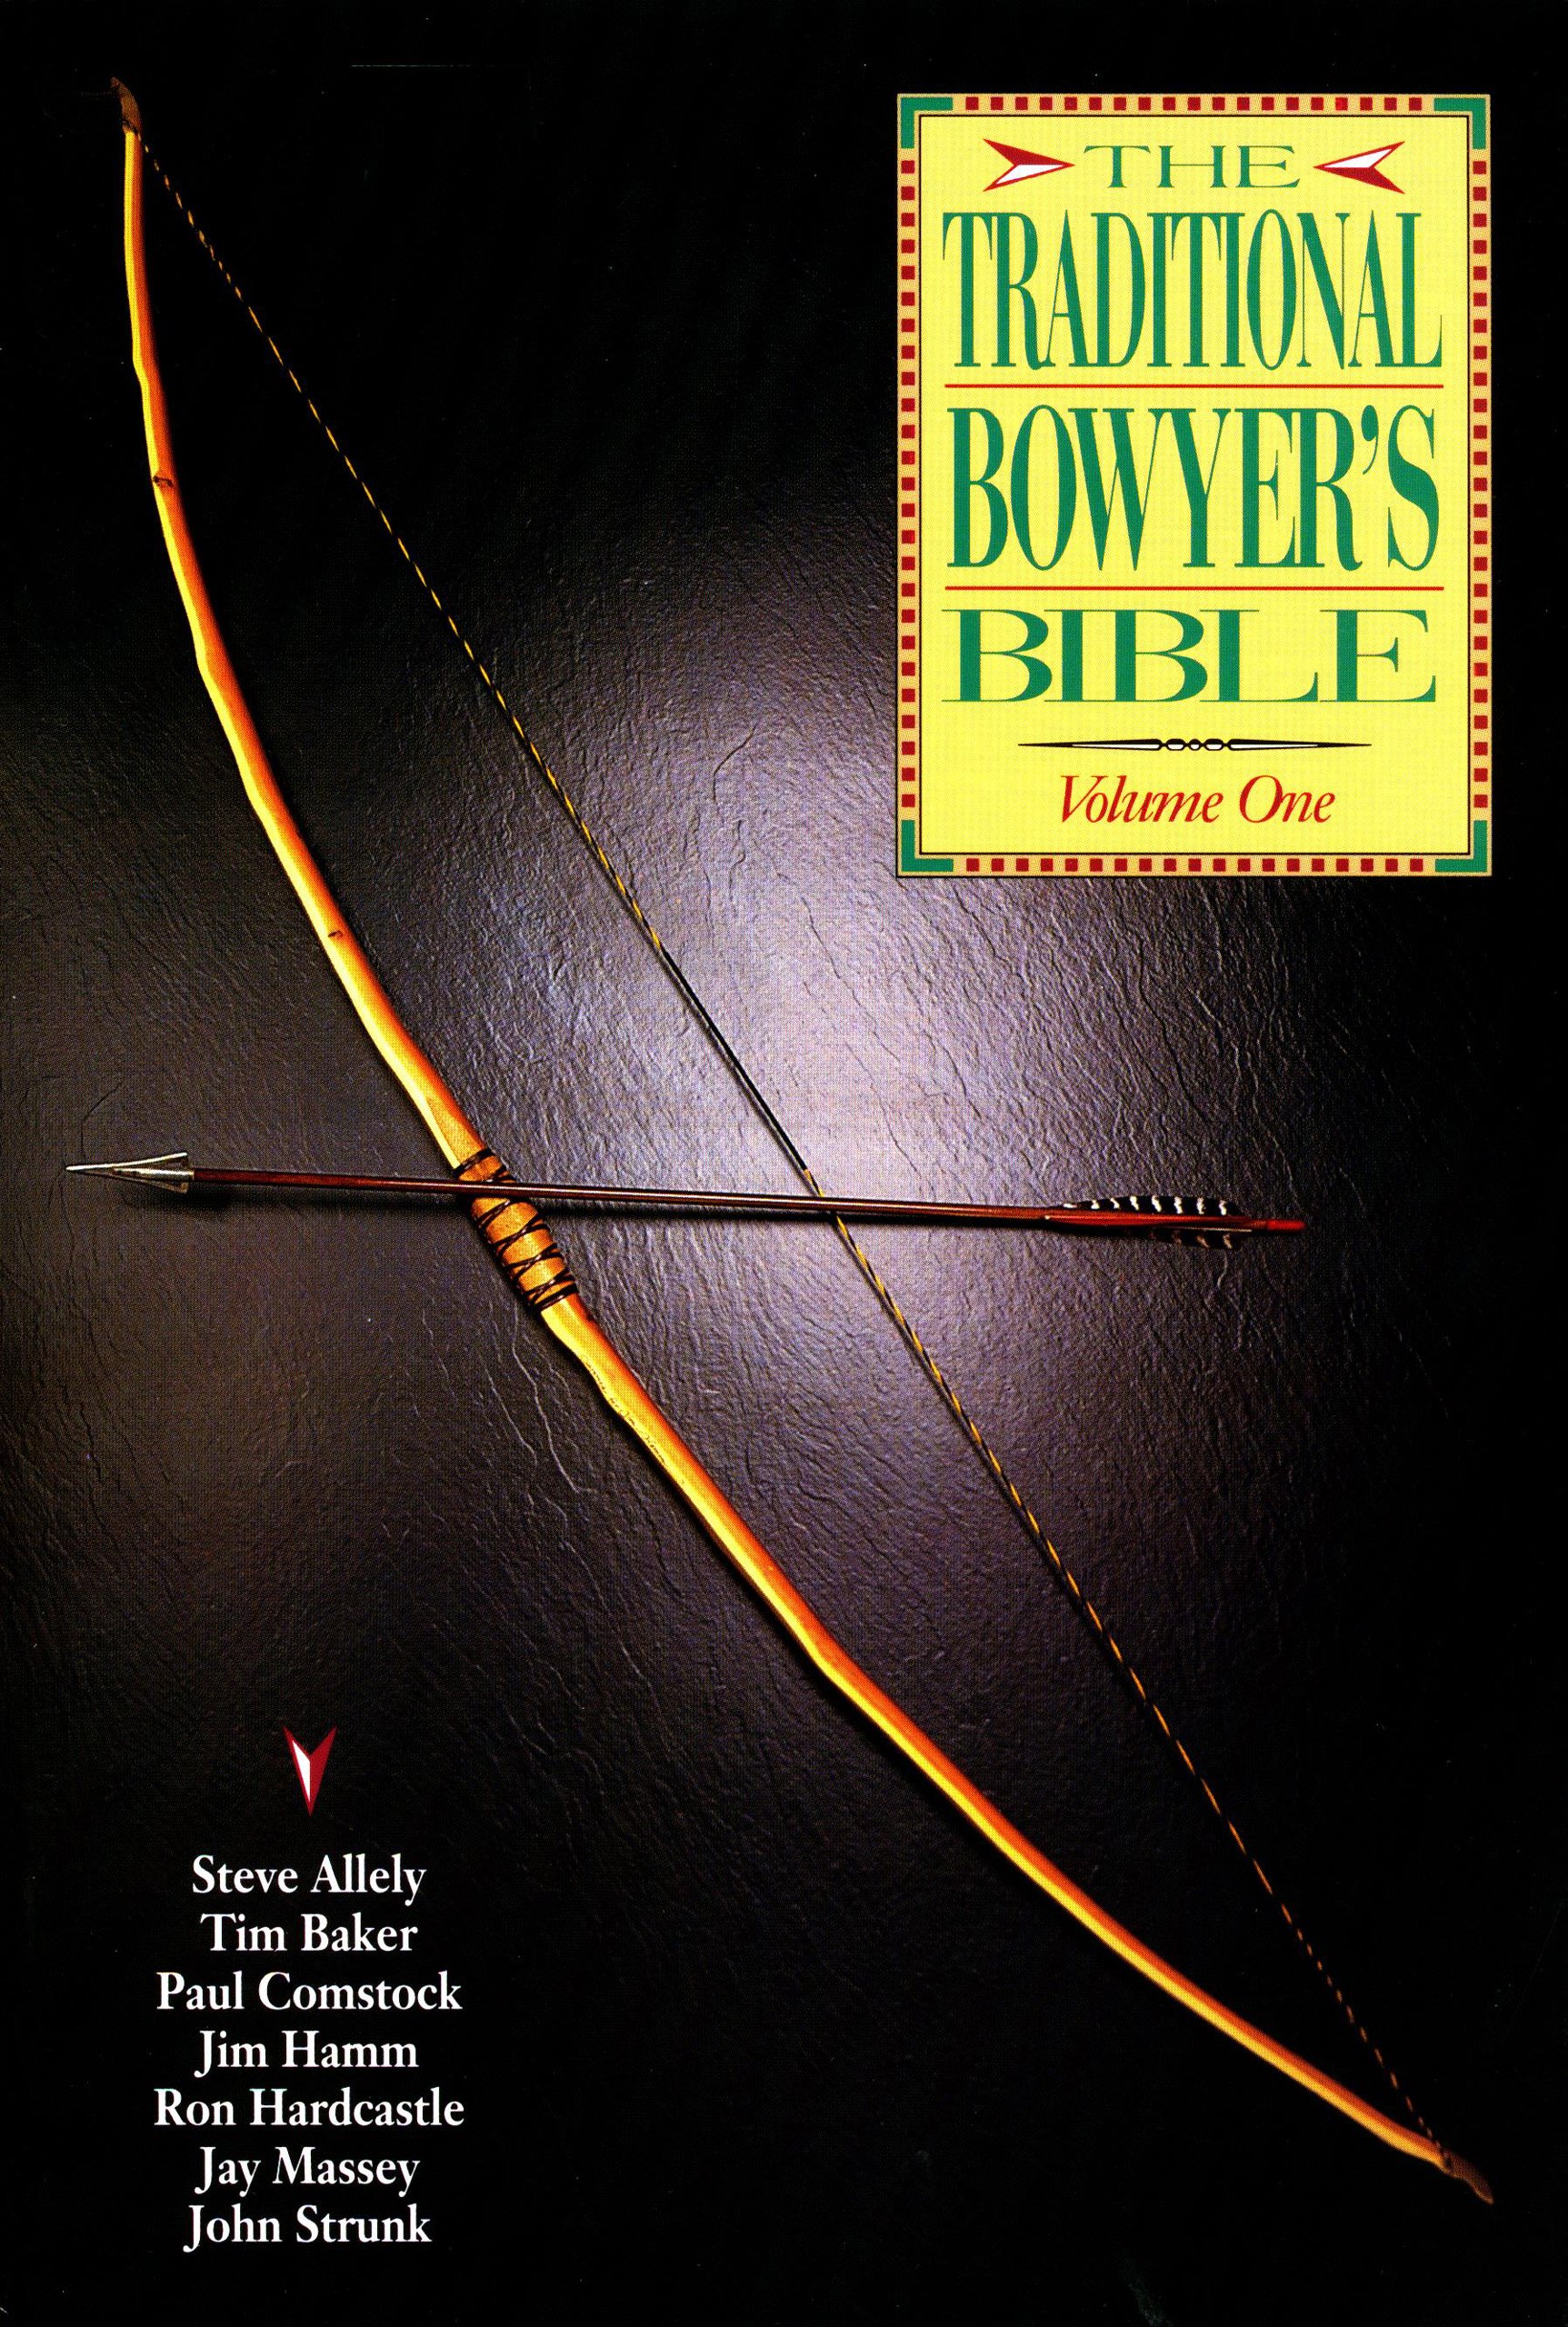 S. Allely, T. Baker, P. Comstock, J.Hamm, R. Hardcastle, J. Massey, J. Strunk, The Traditional Bowyer's Bible